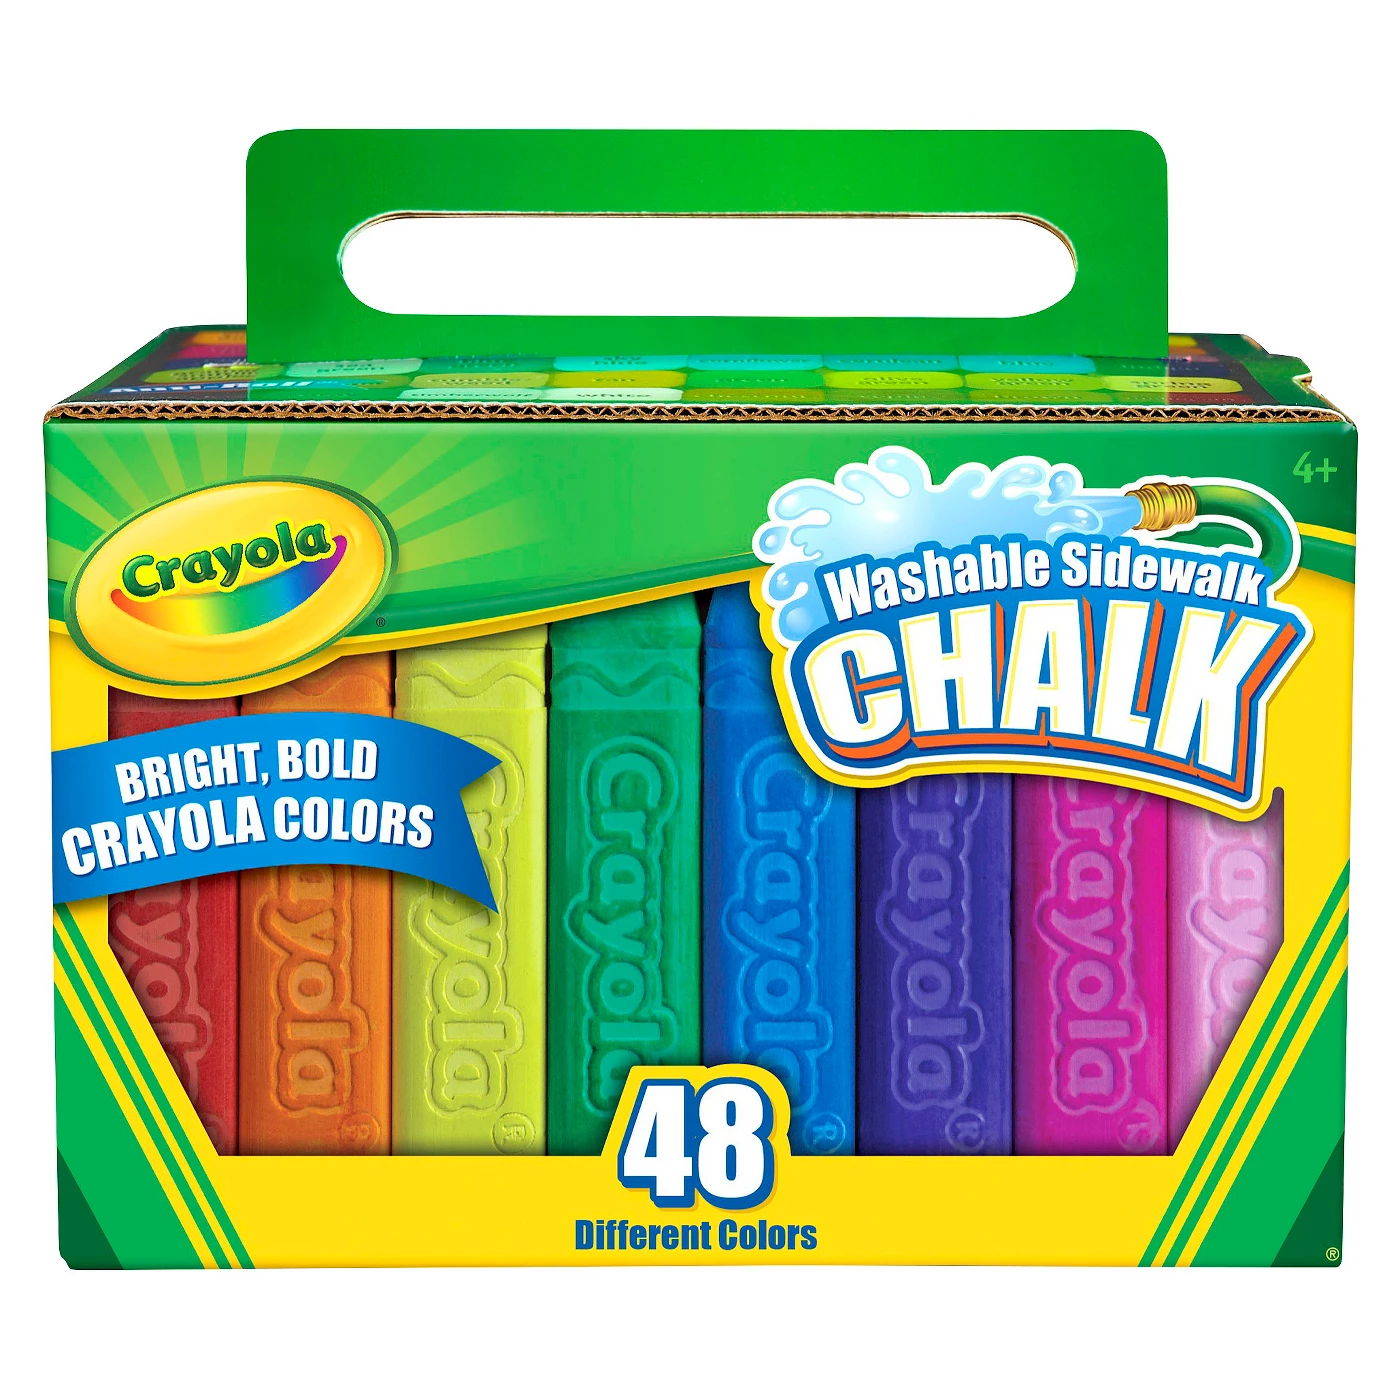 Crayola 48ct Washable Sidewalk Chalk Assorted Colors - image 1 of 3